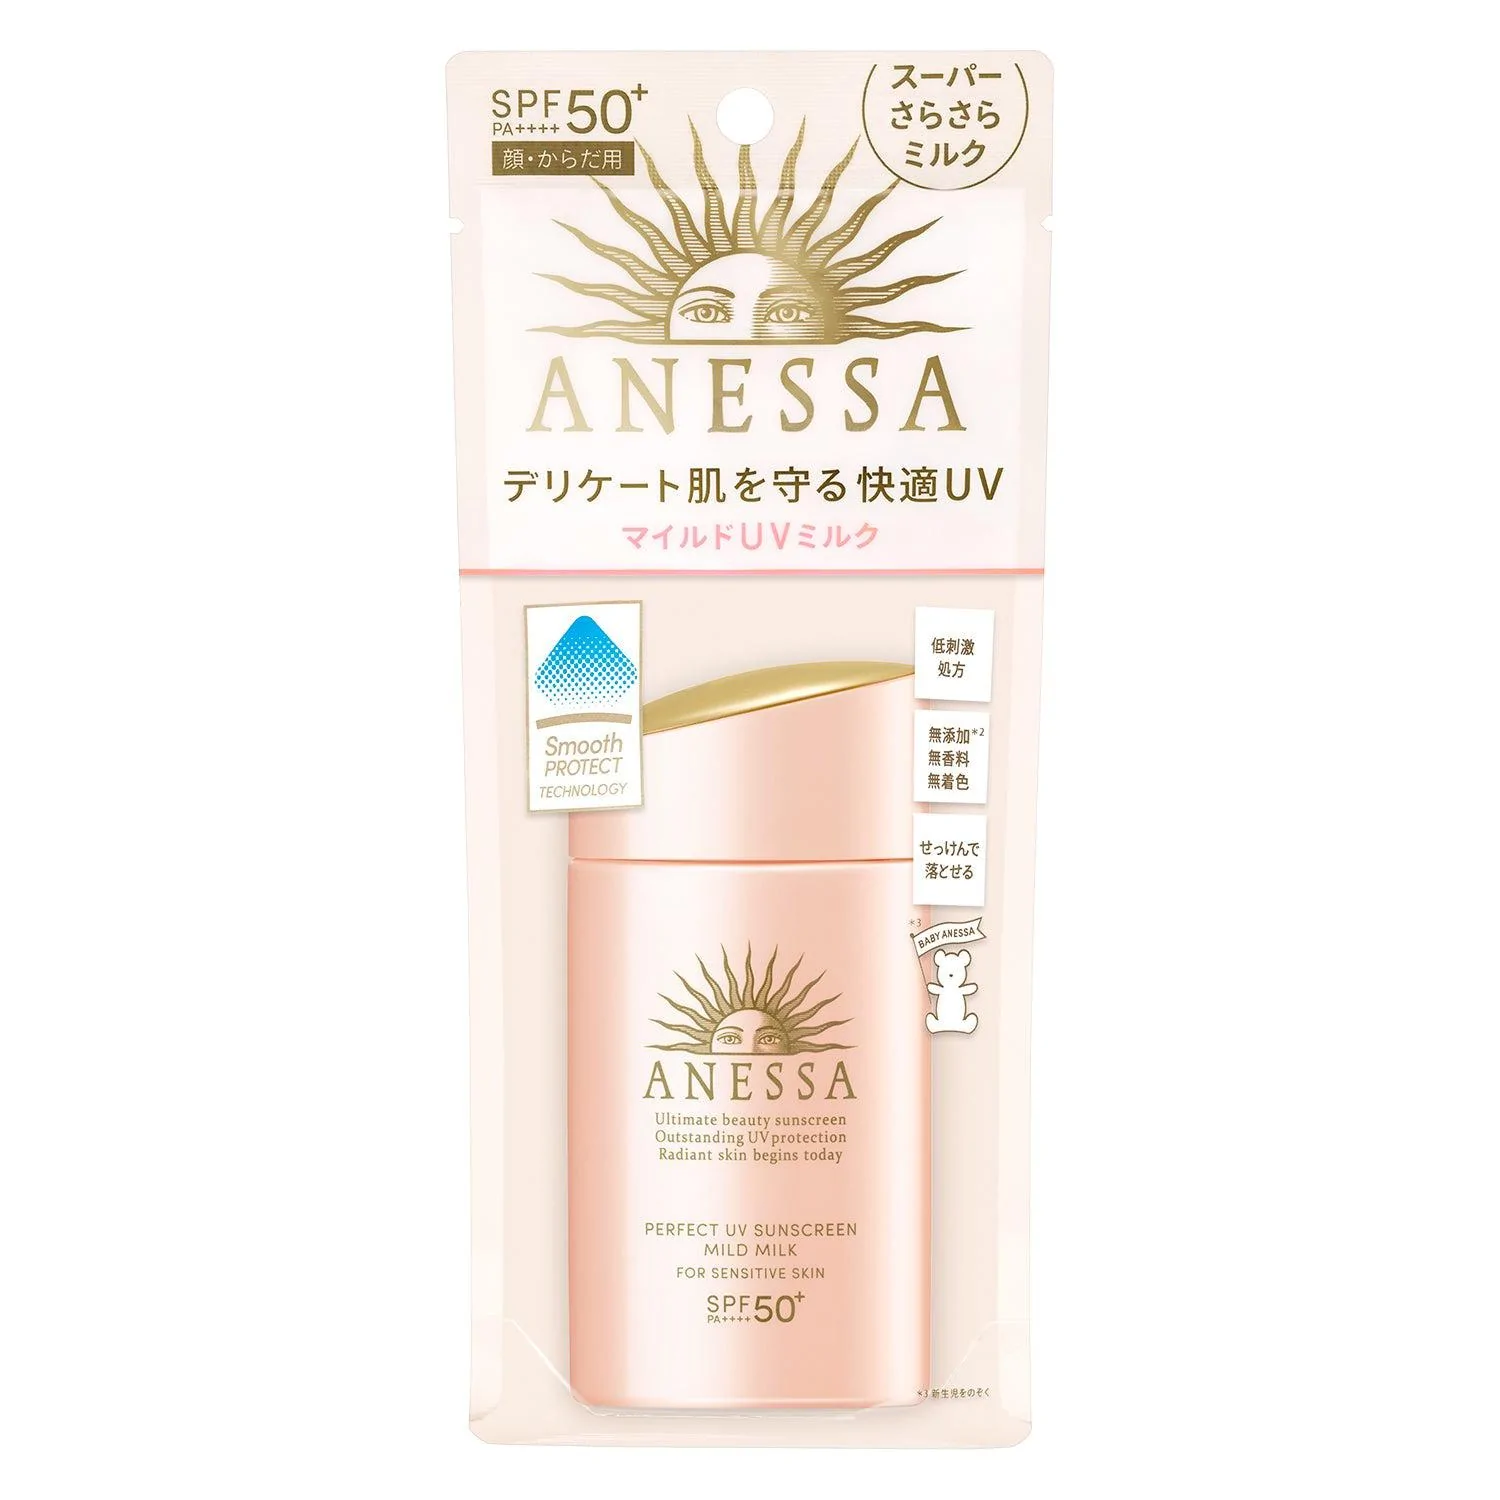 Shiseido ANESSA Perfect UV Mild Milk N Sunscreen 60ml SPF50+/PA++